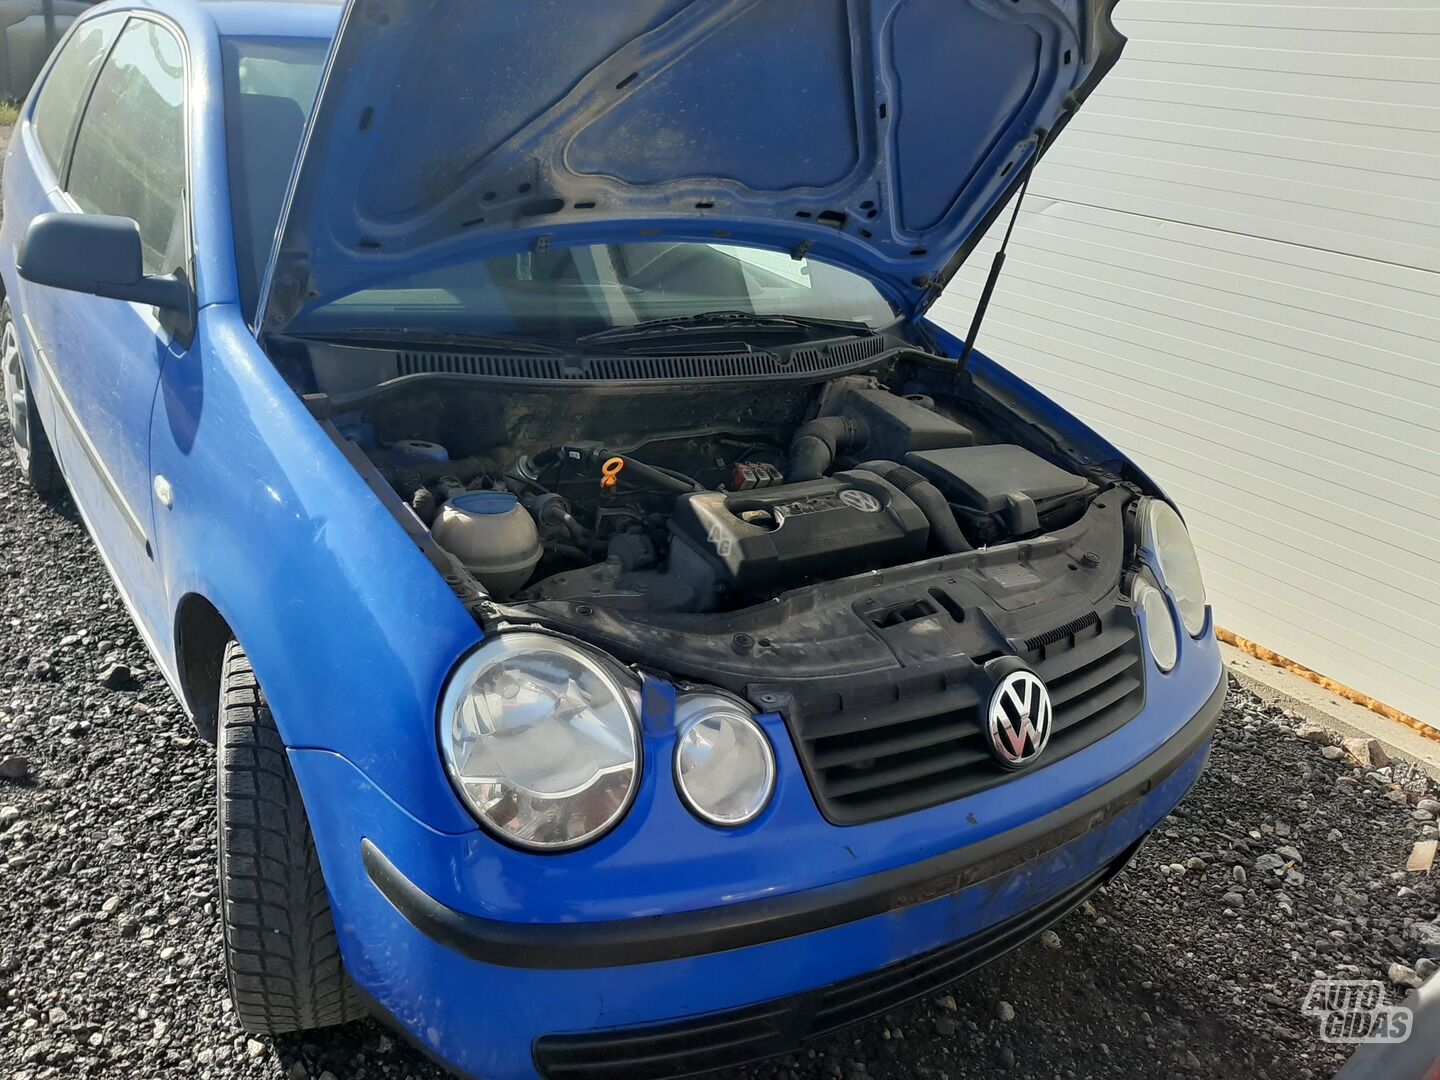 Volkswagen Polo 2005 m dalys